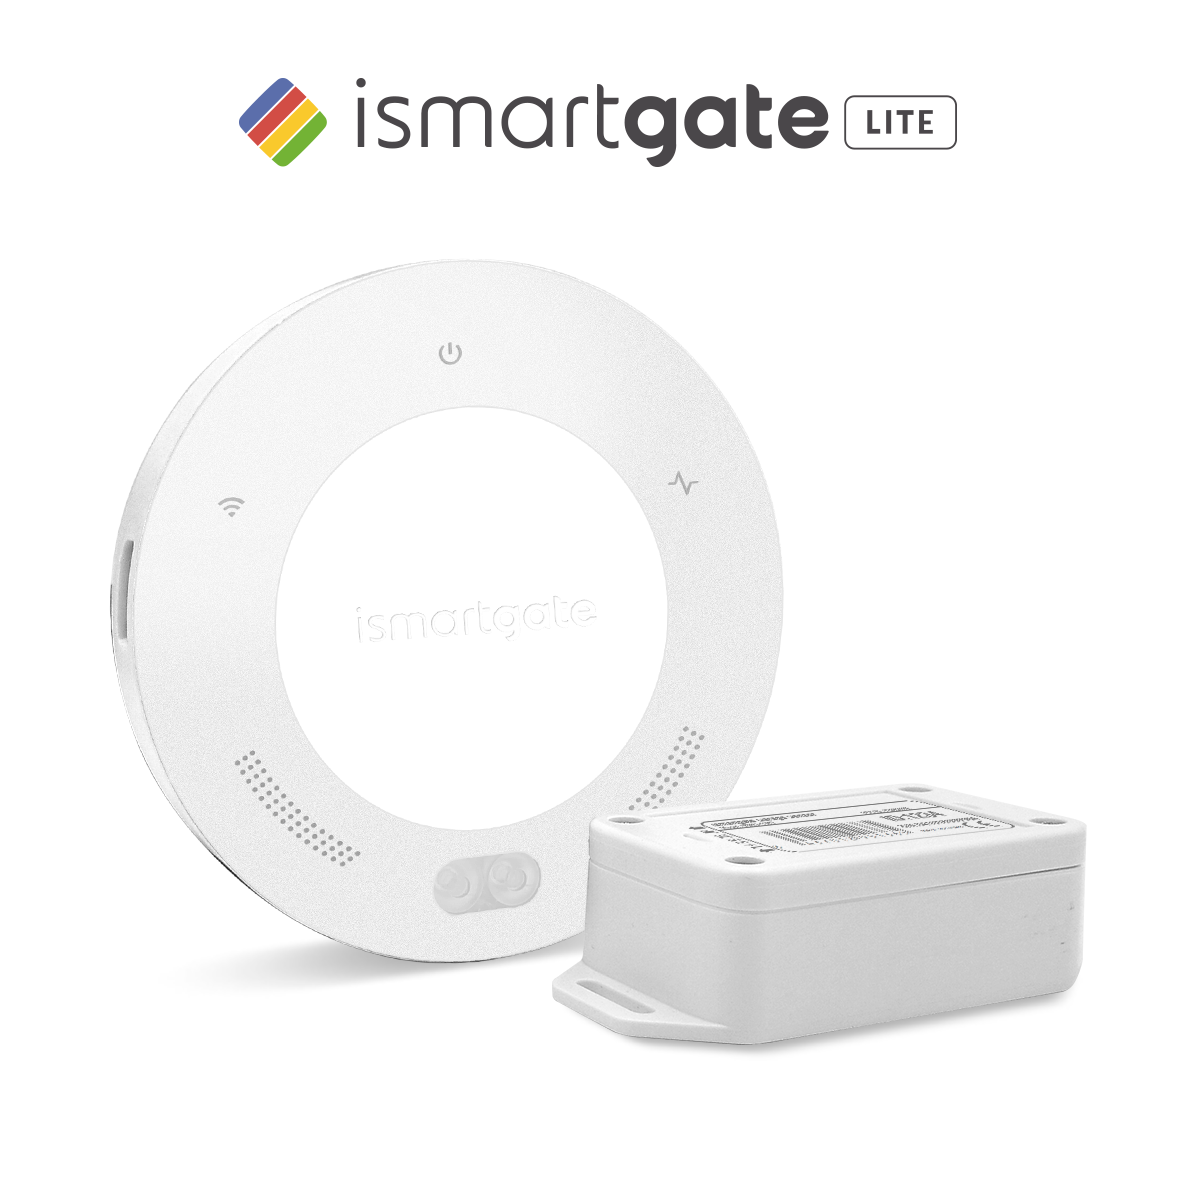 iSmartgate LITE Segmented/Tilt Garage door kit